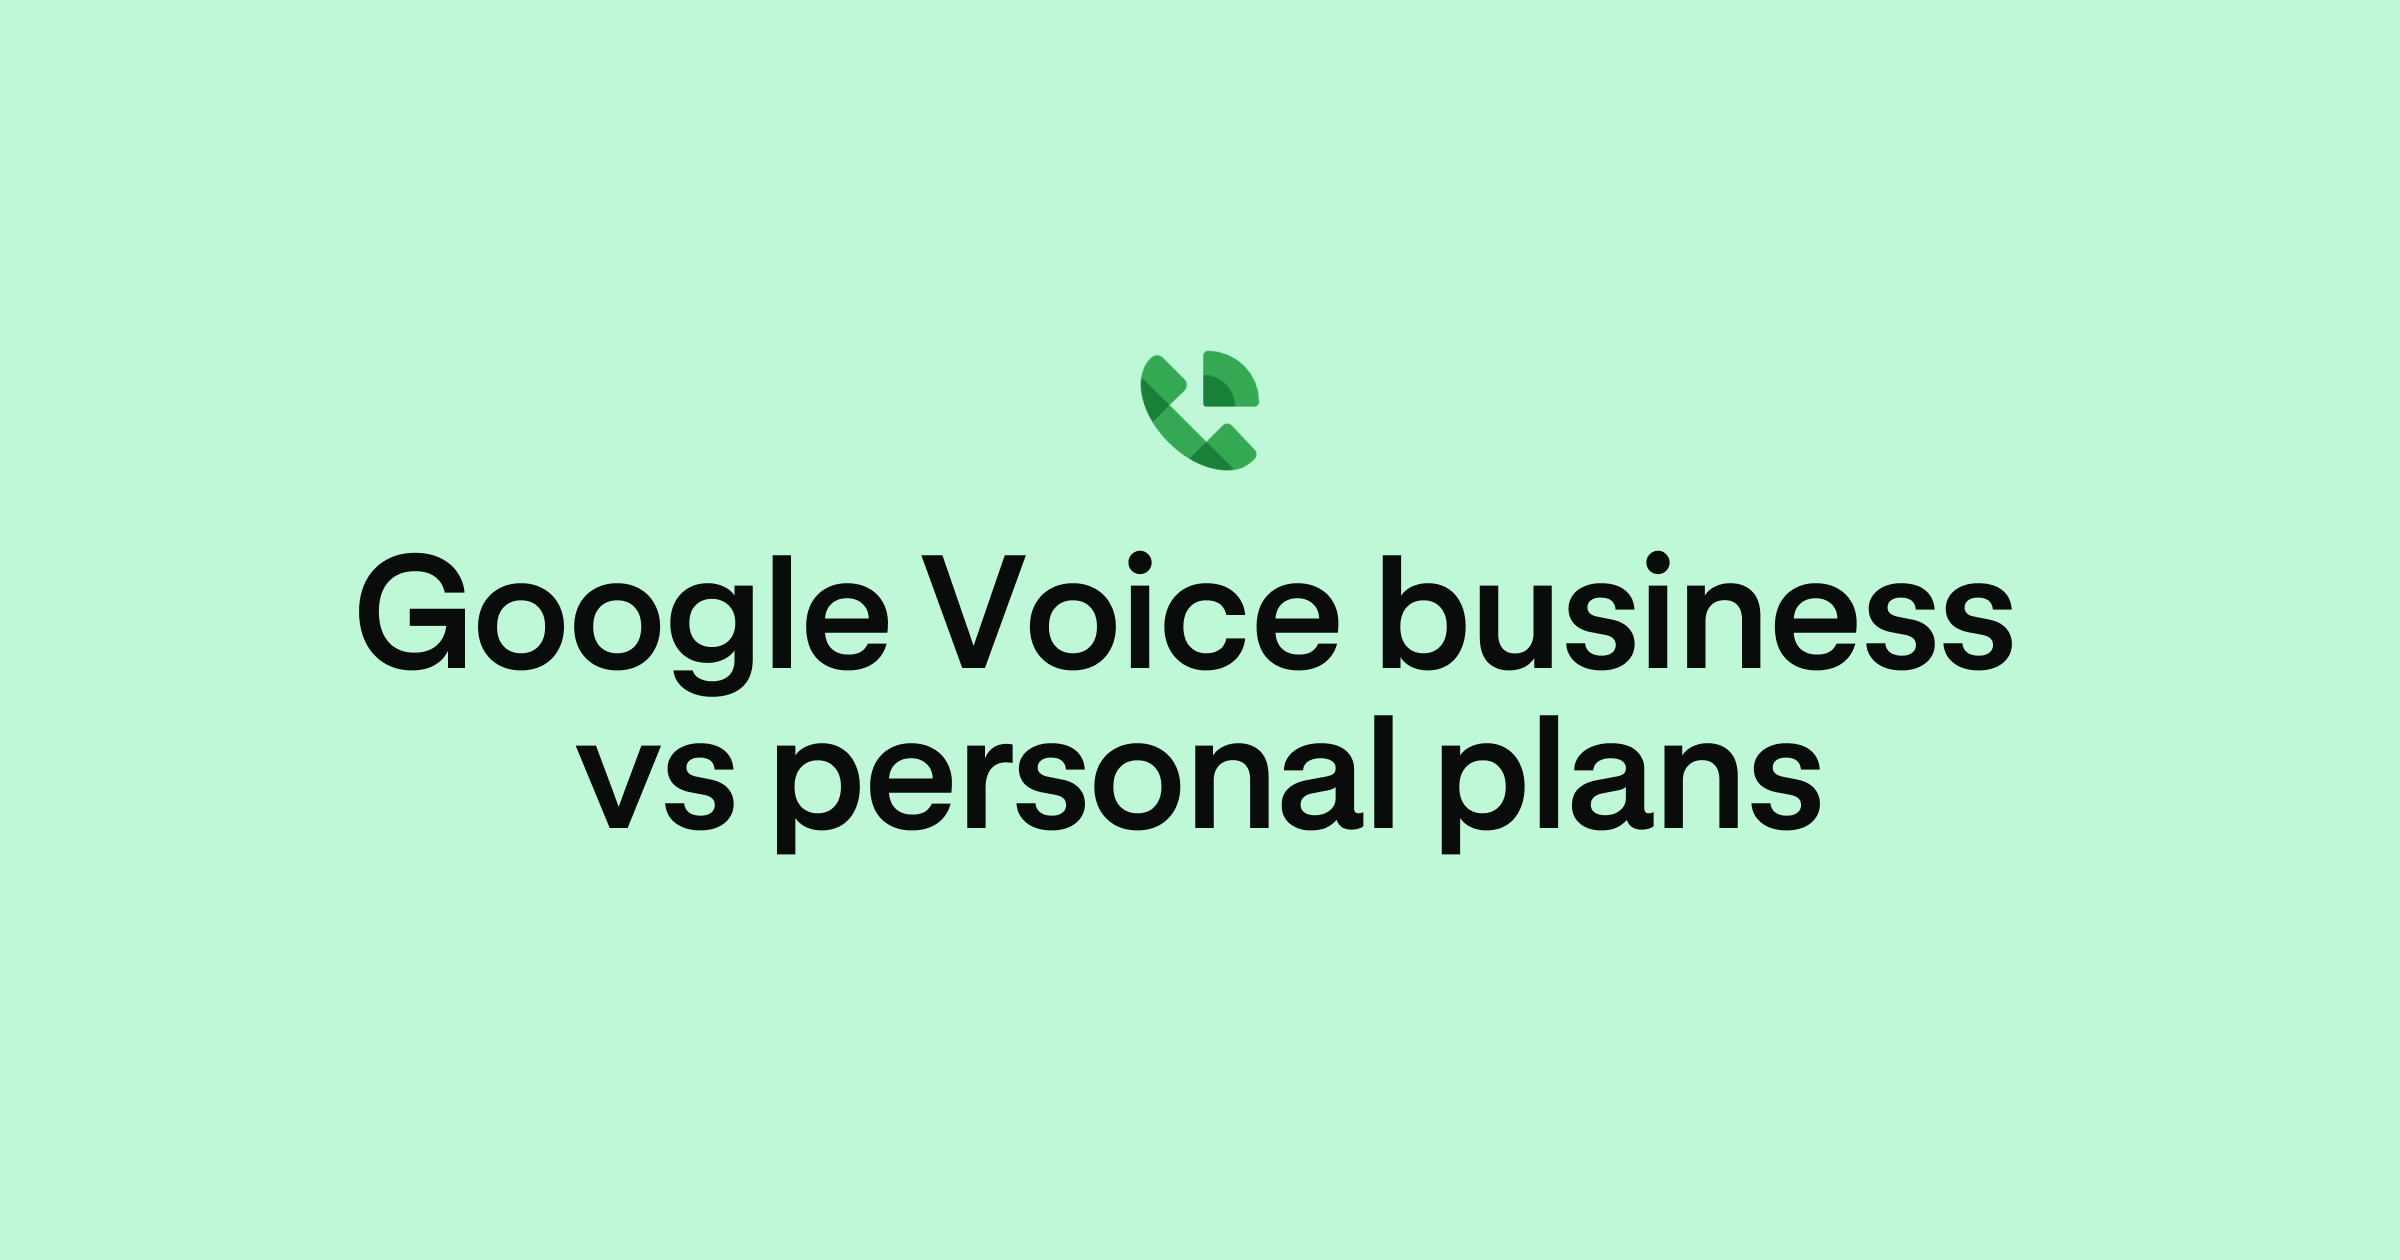 Google Voice personal vs business